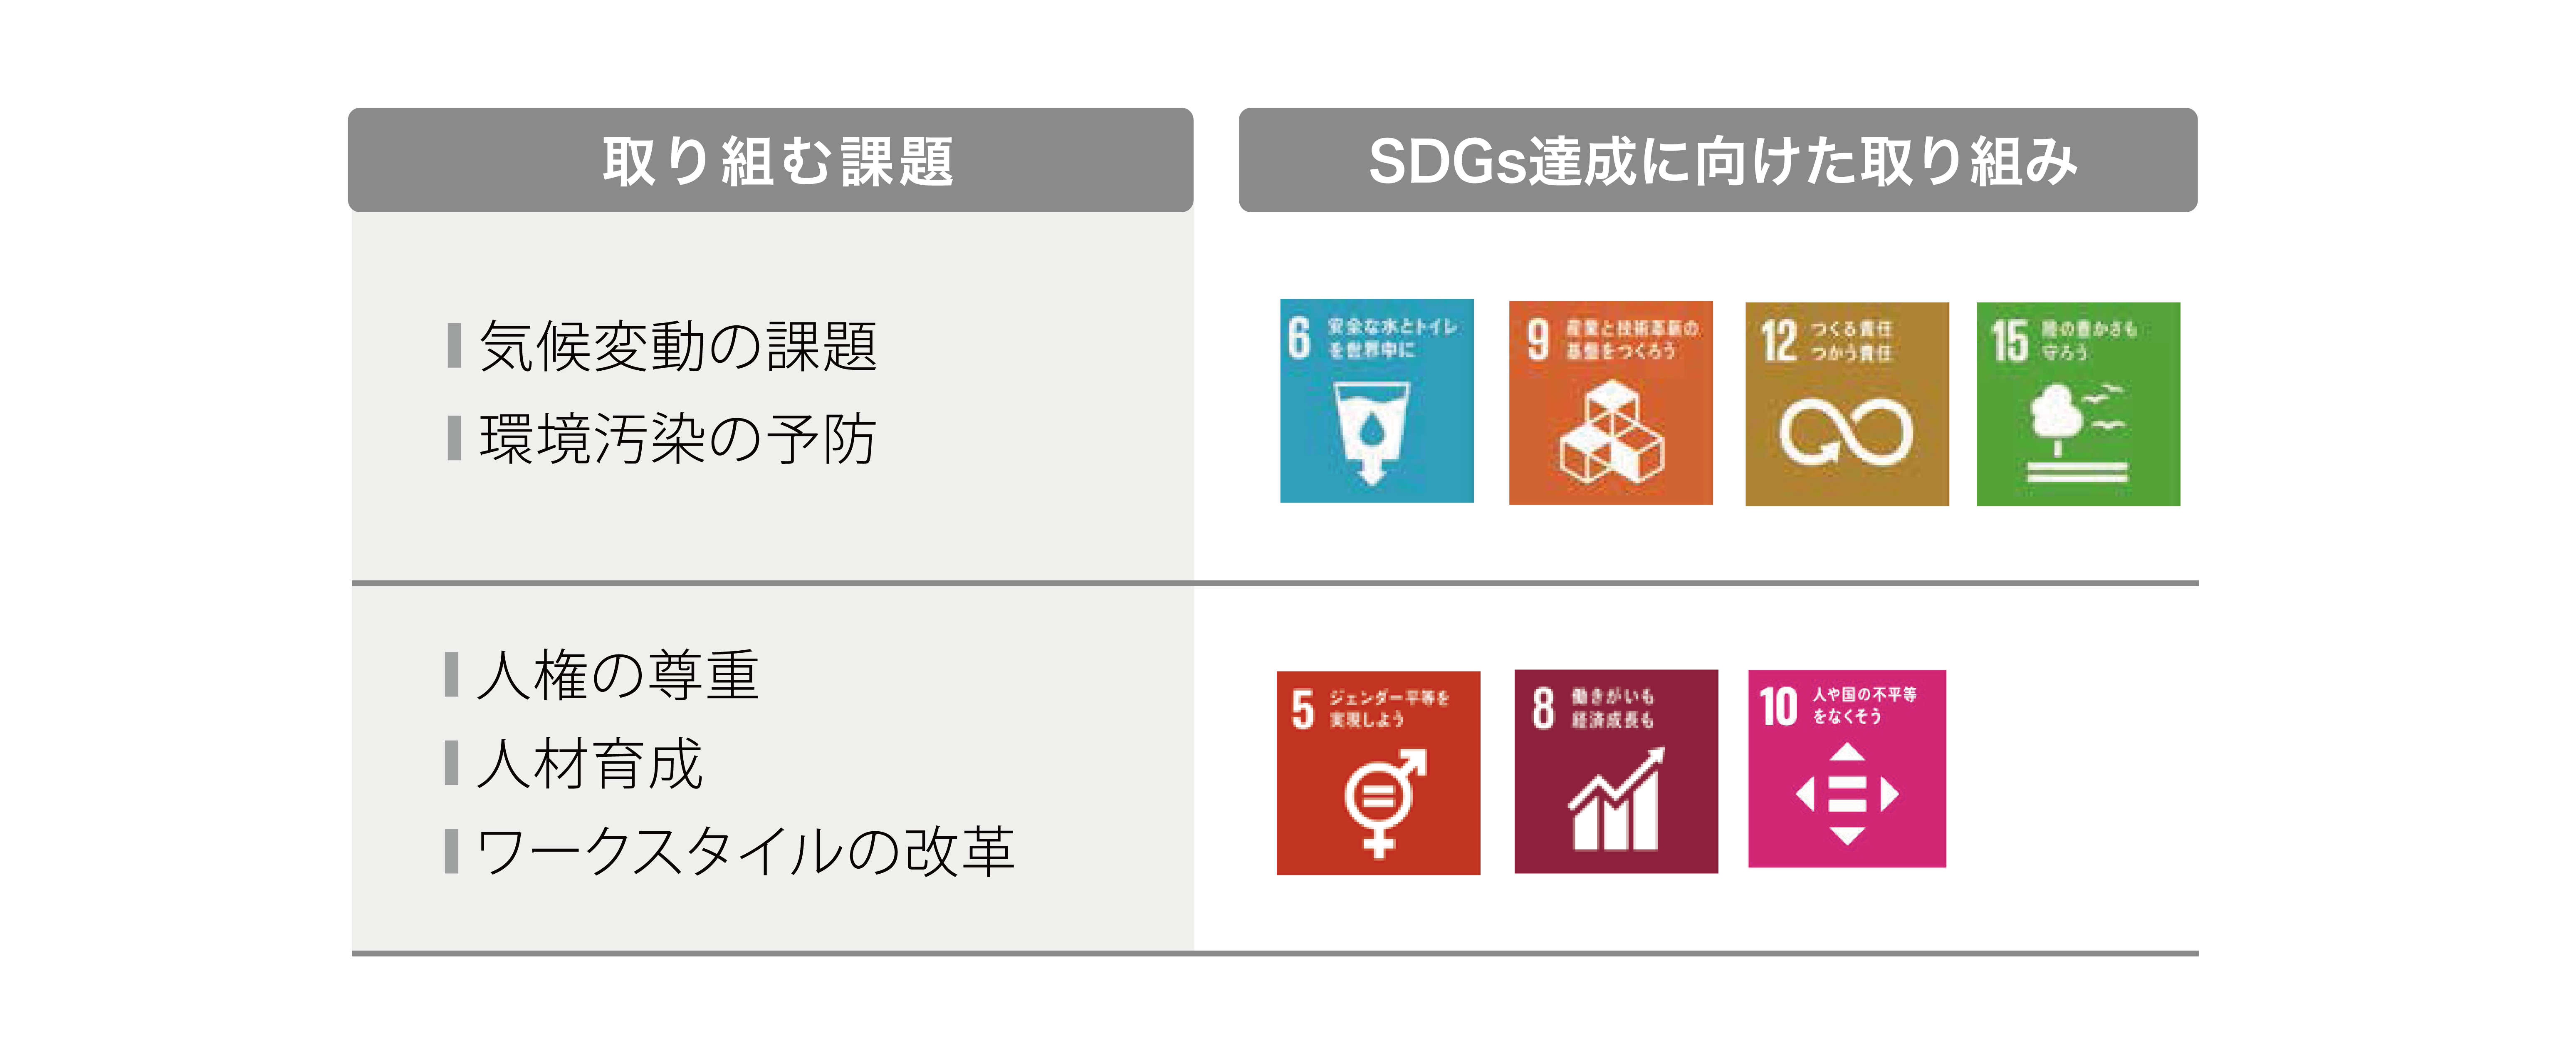 SDGs達成に向けた取組み